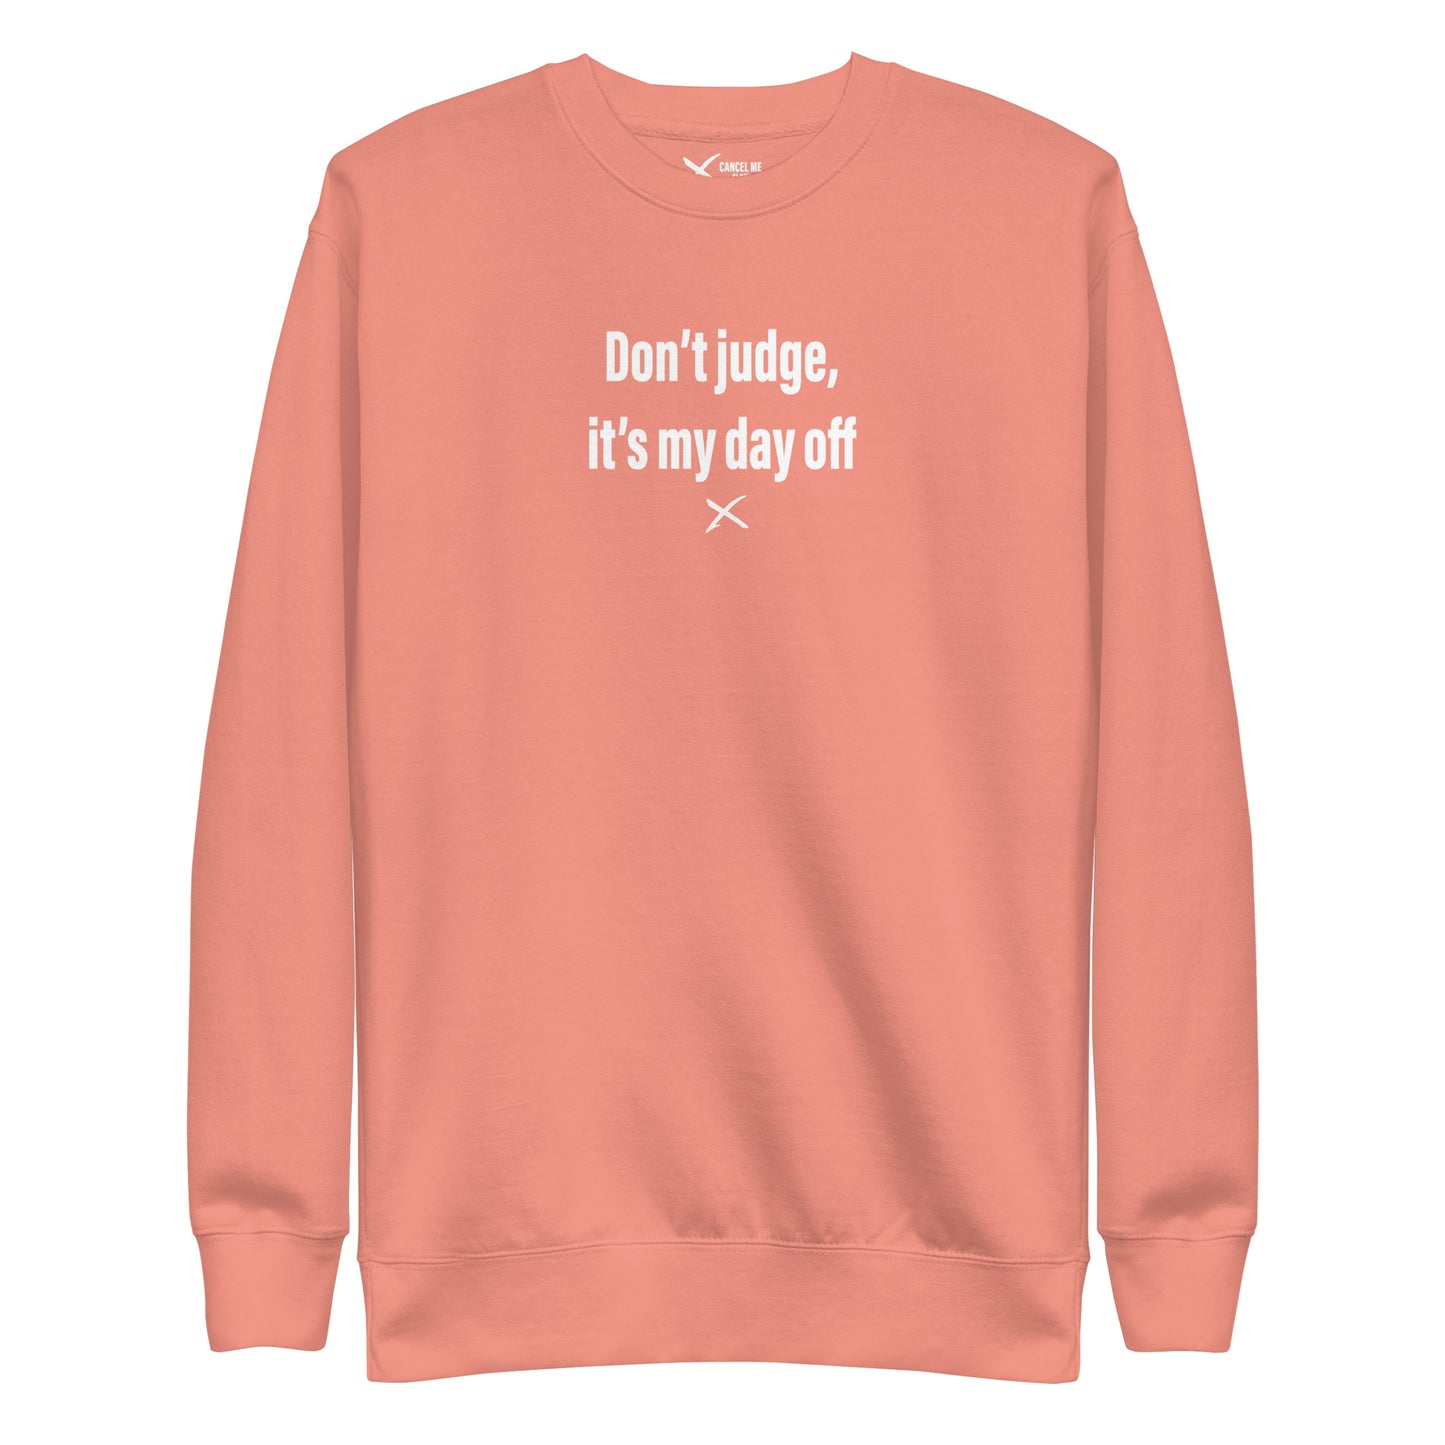 Don't judge, it's my day off - Sweatshirt